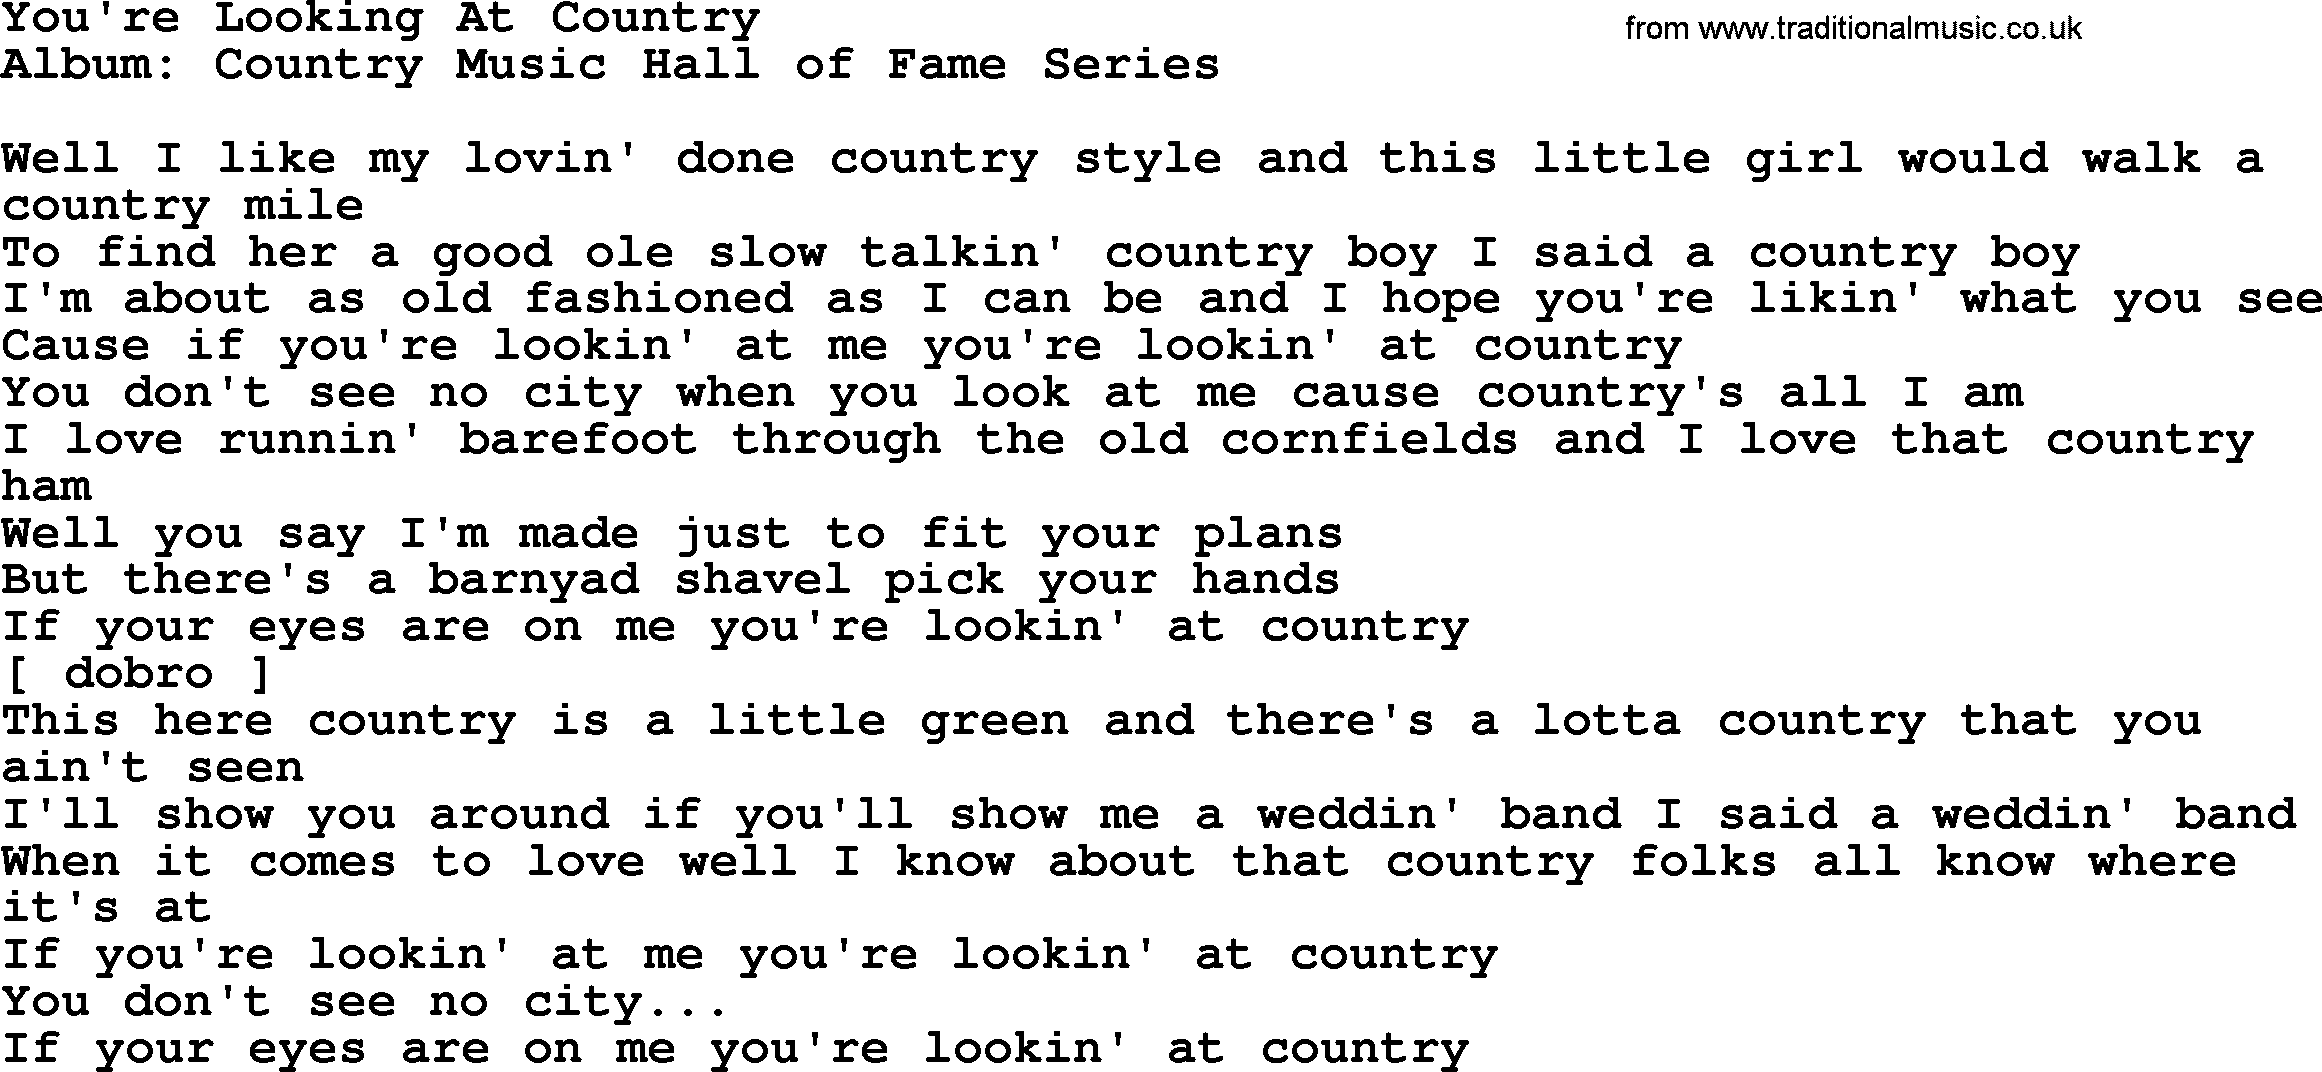 Loretta Lynn song: You're Looking At Country lyrics